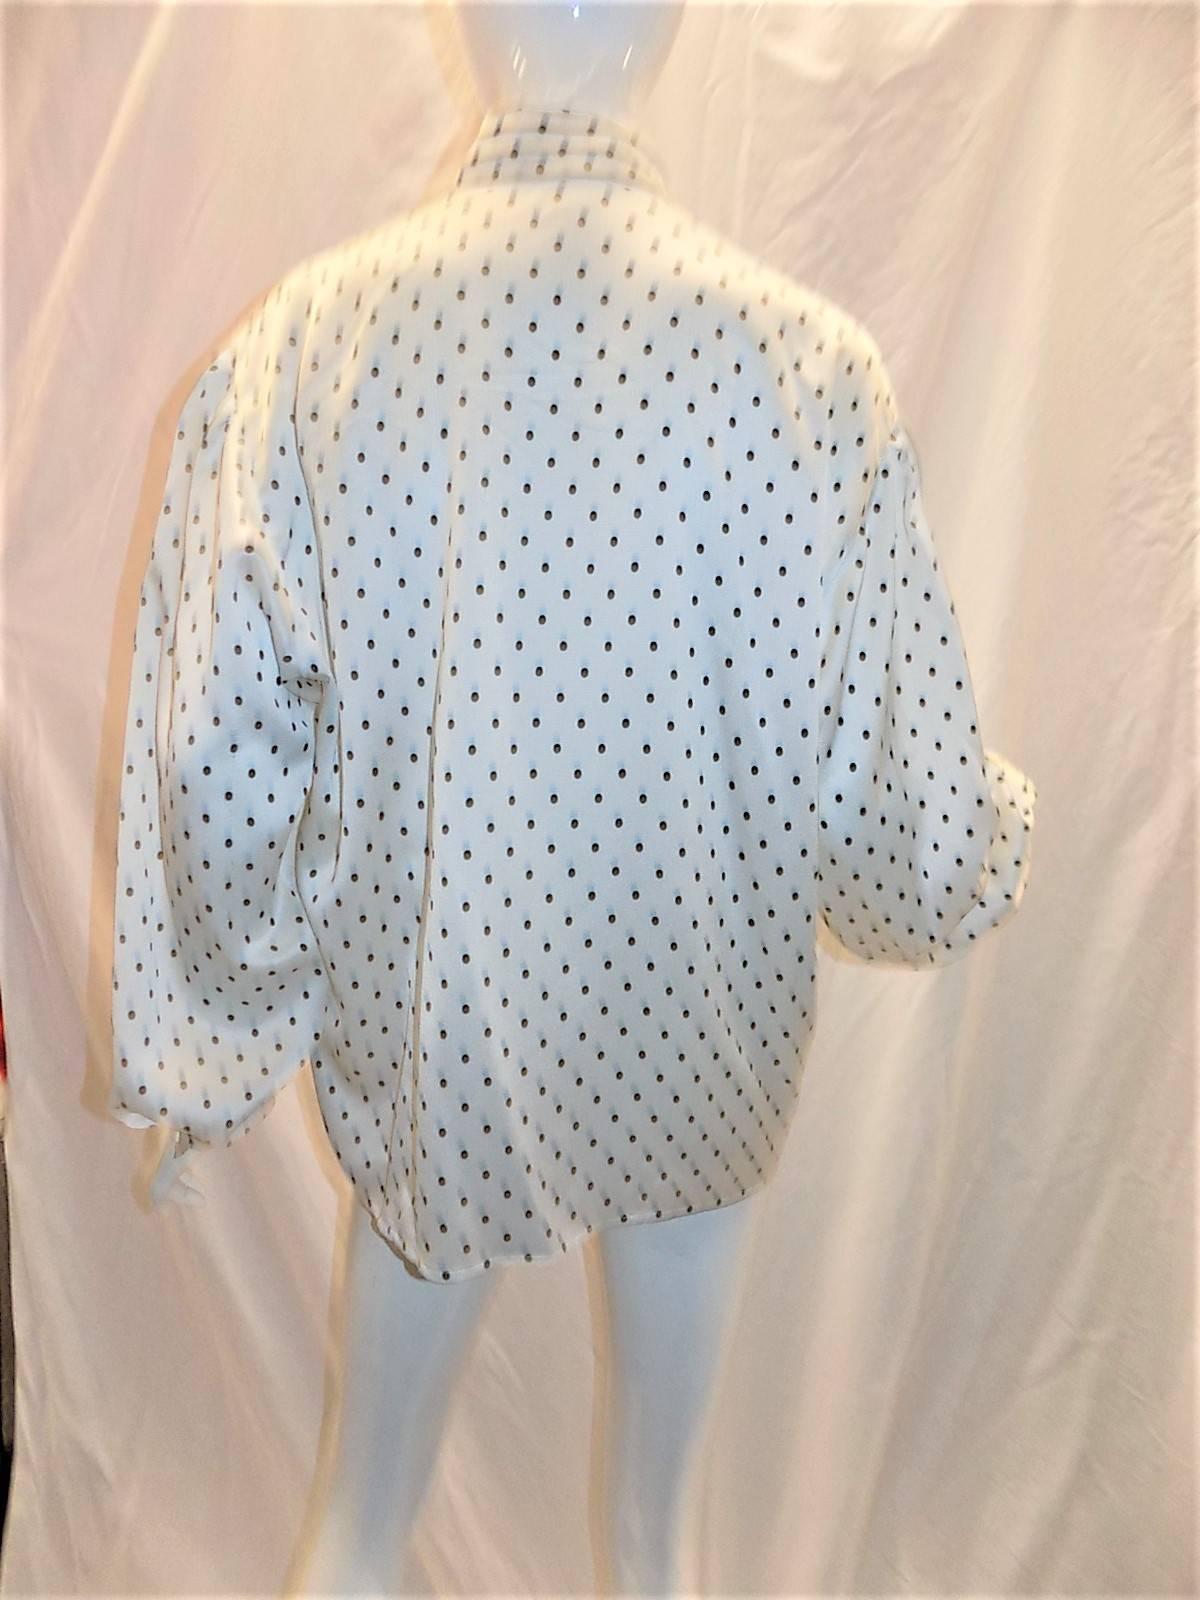 Women's Louis Feraud polka dot blouse with tie sz 14